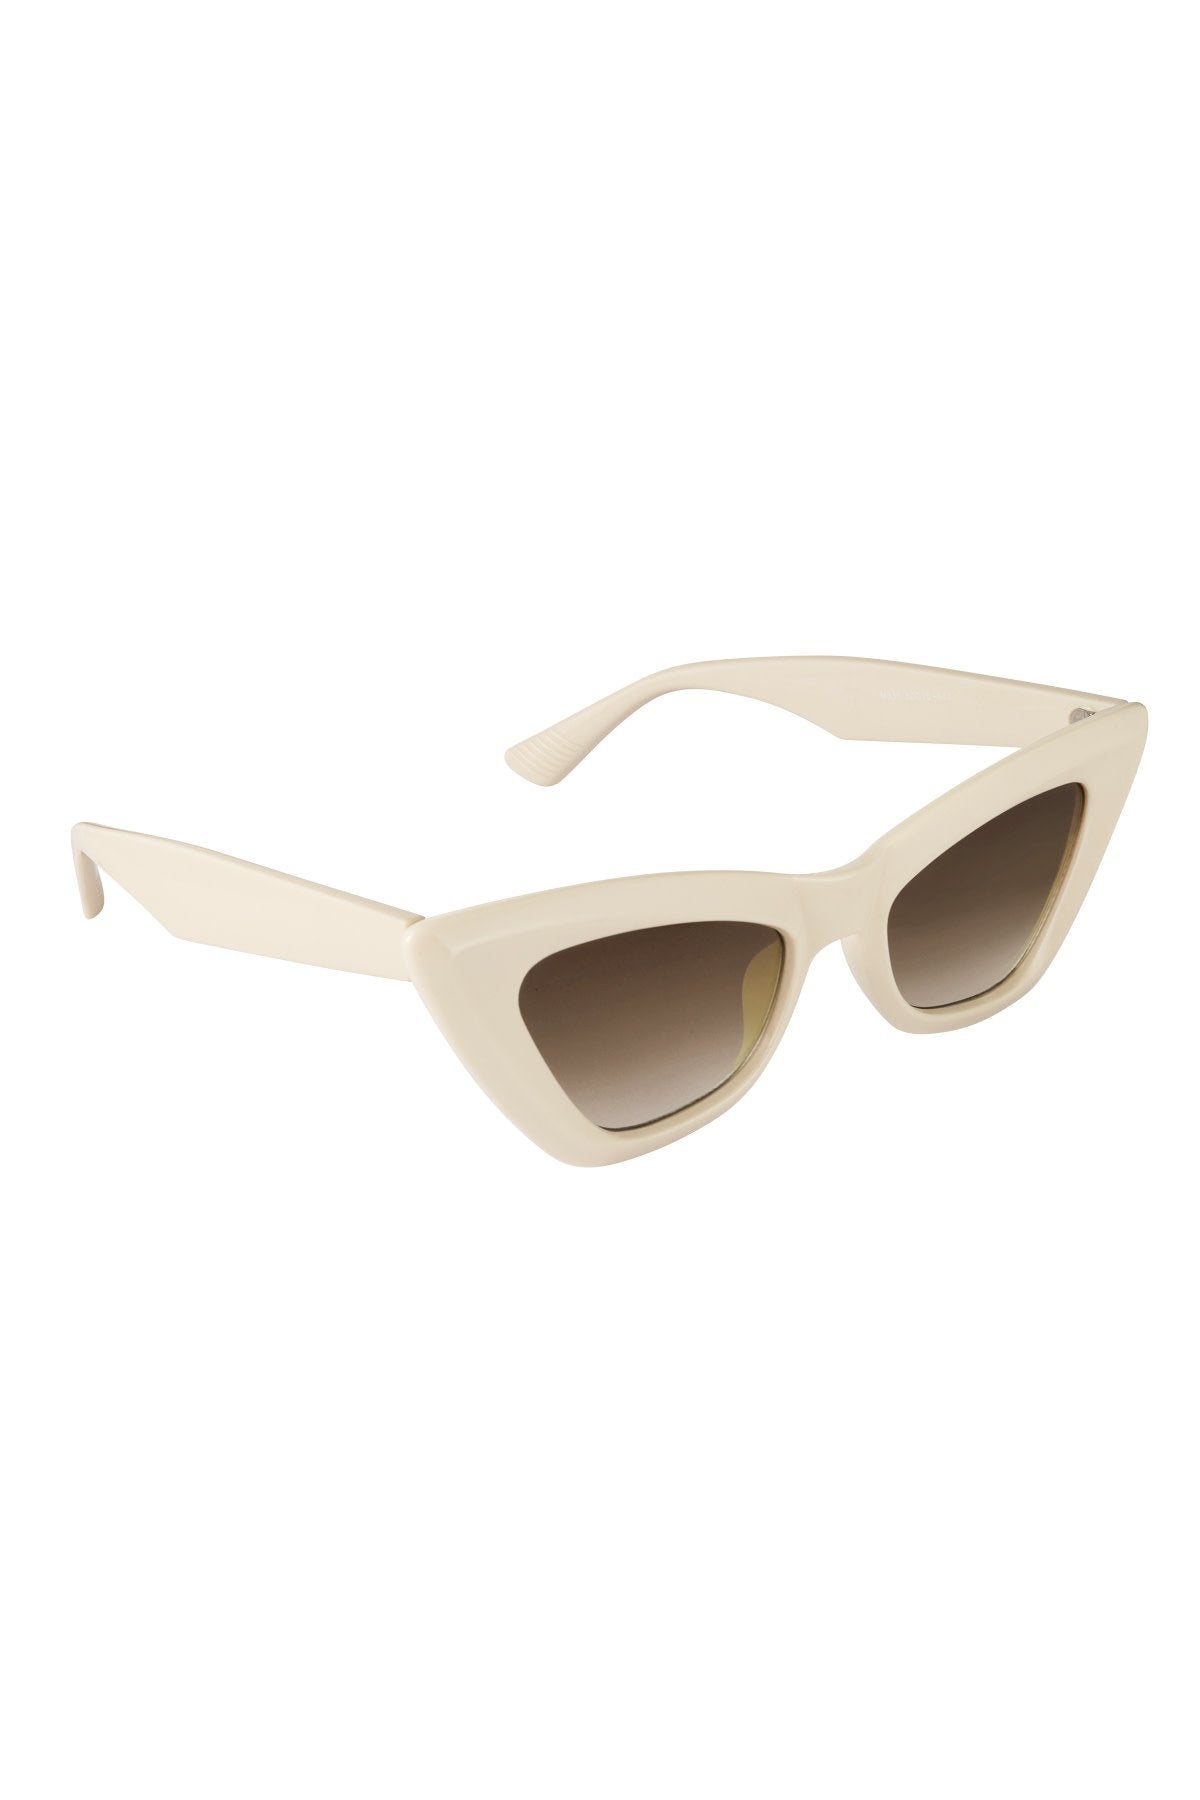 Sunglasses small cateye white